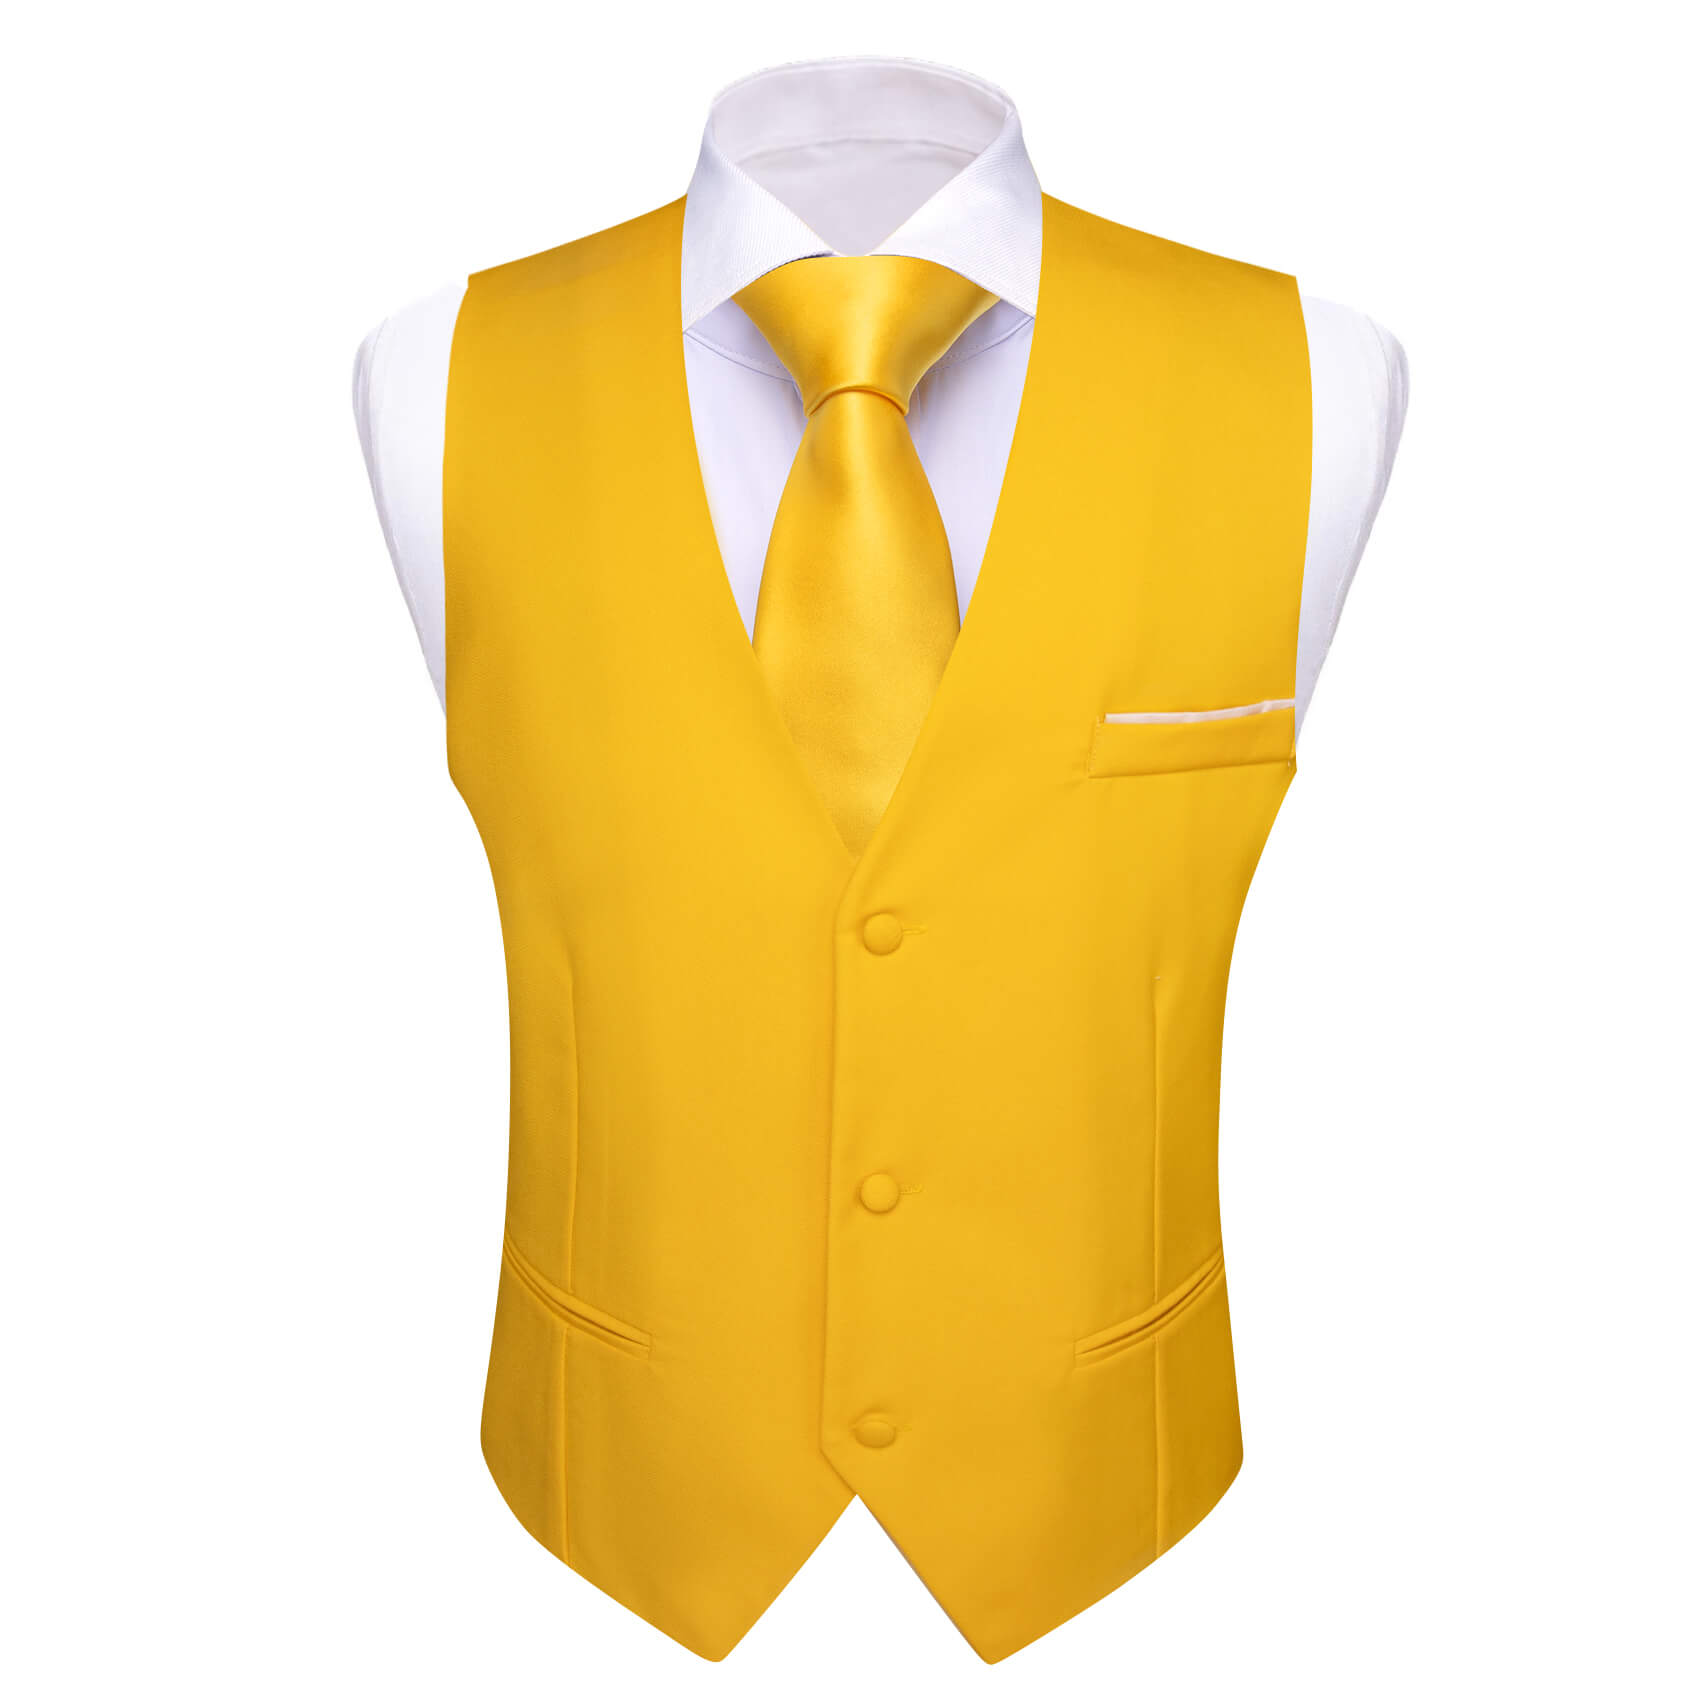 Barry Wang Mens Waistcoat Latte Yellow Solid No Collar Vest